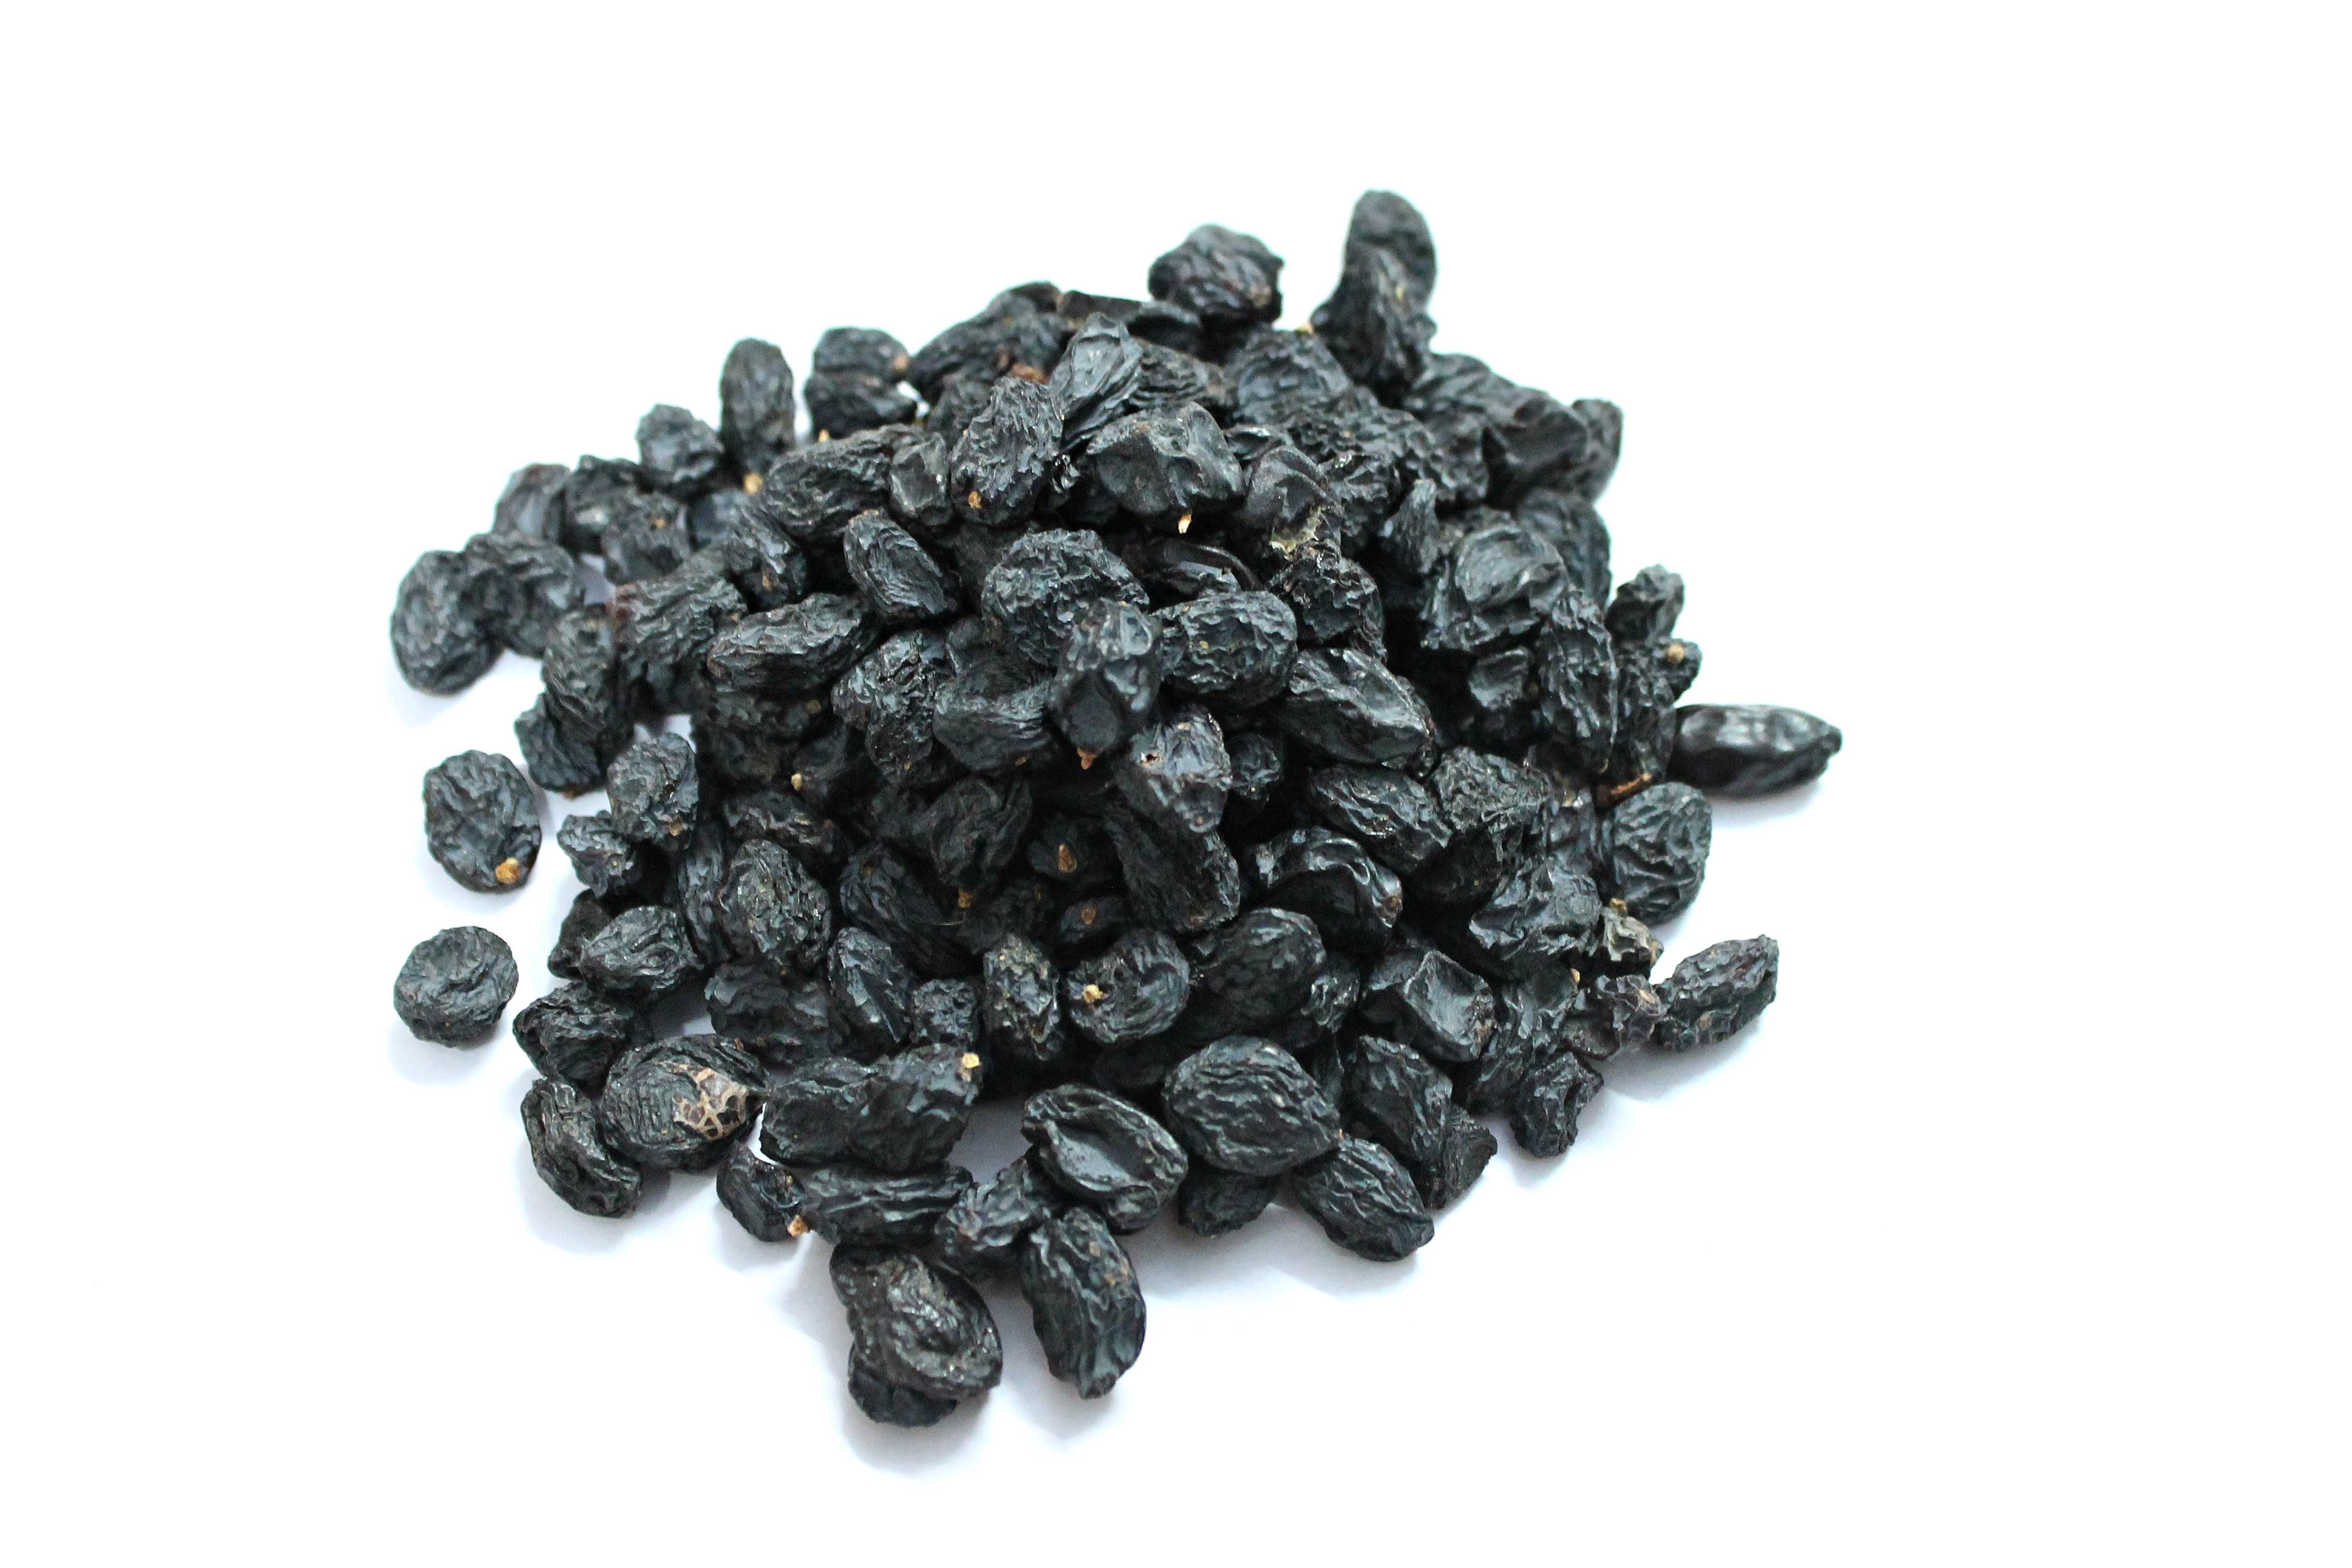 Buy Afghanistan Black Raisins 1 KG Export Quality Online - Get 75% Off